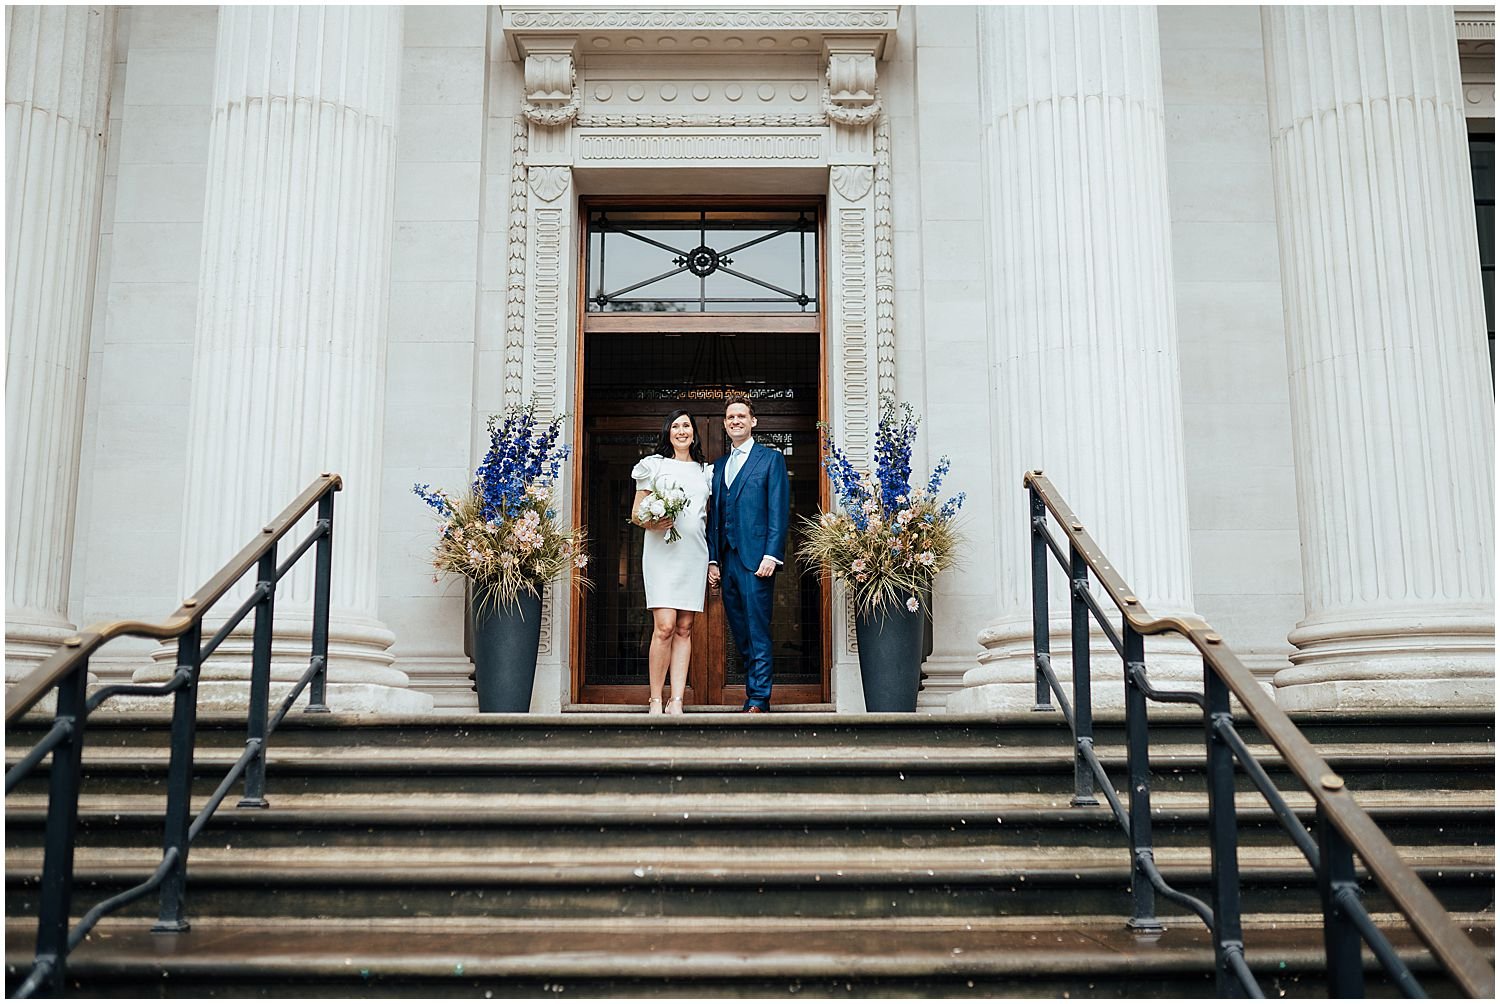 Old Marylebone Town Hall wedding photo on steps